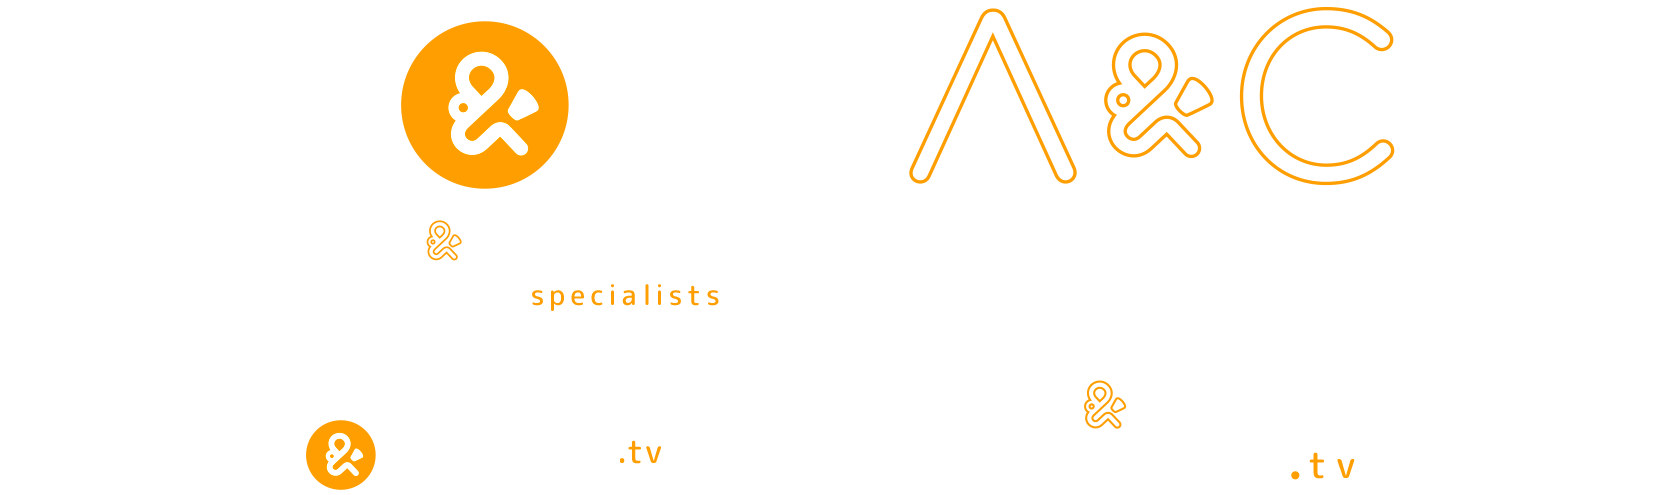 artcinema-logos